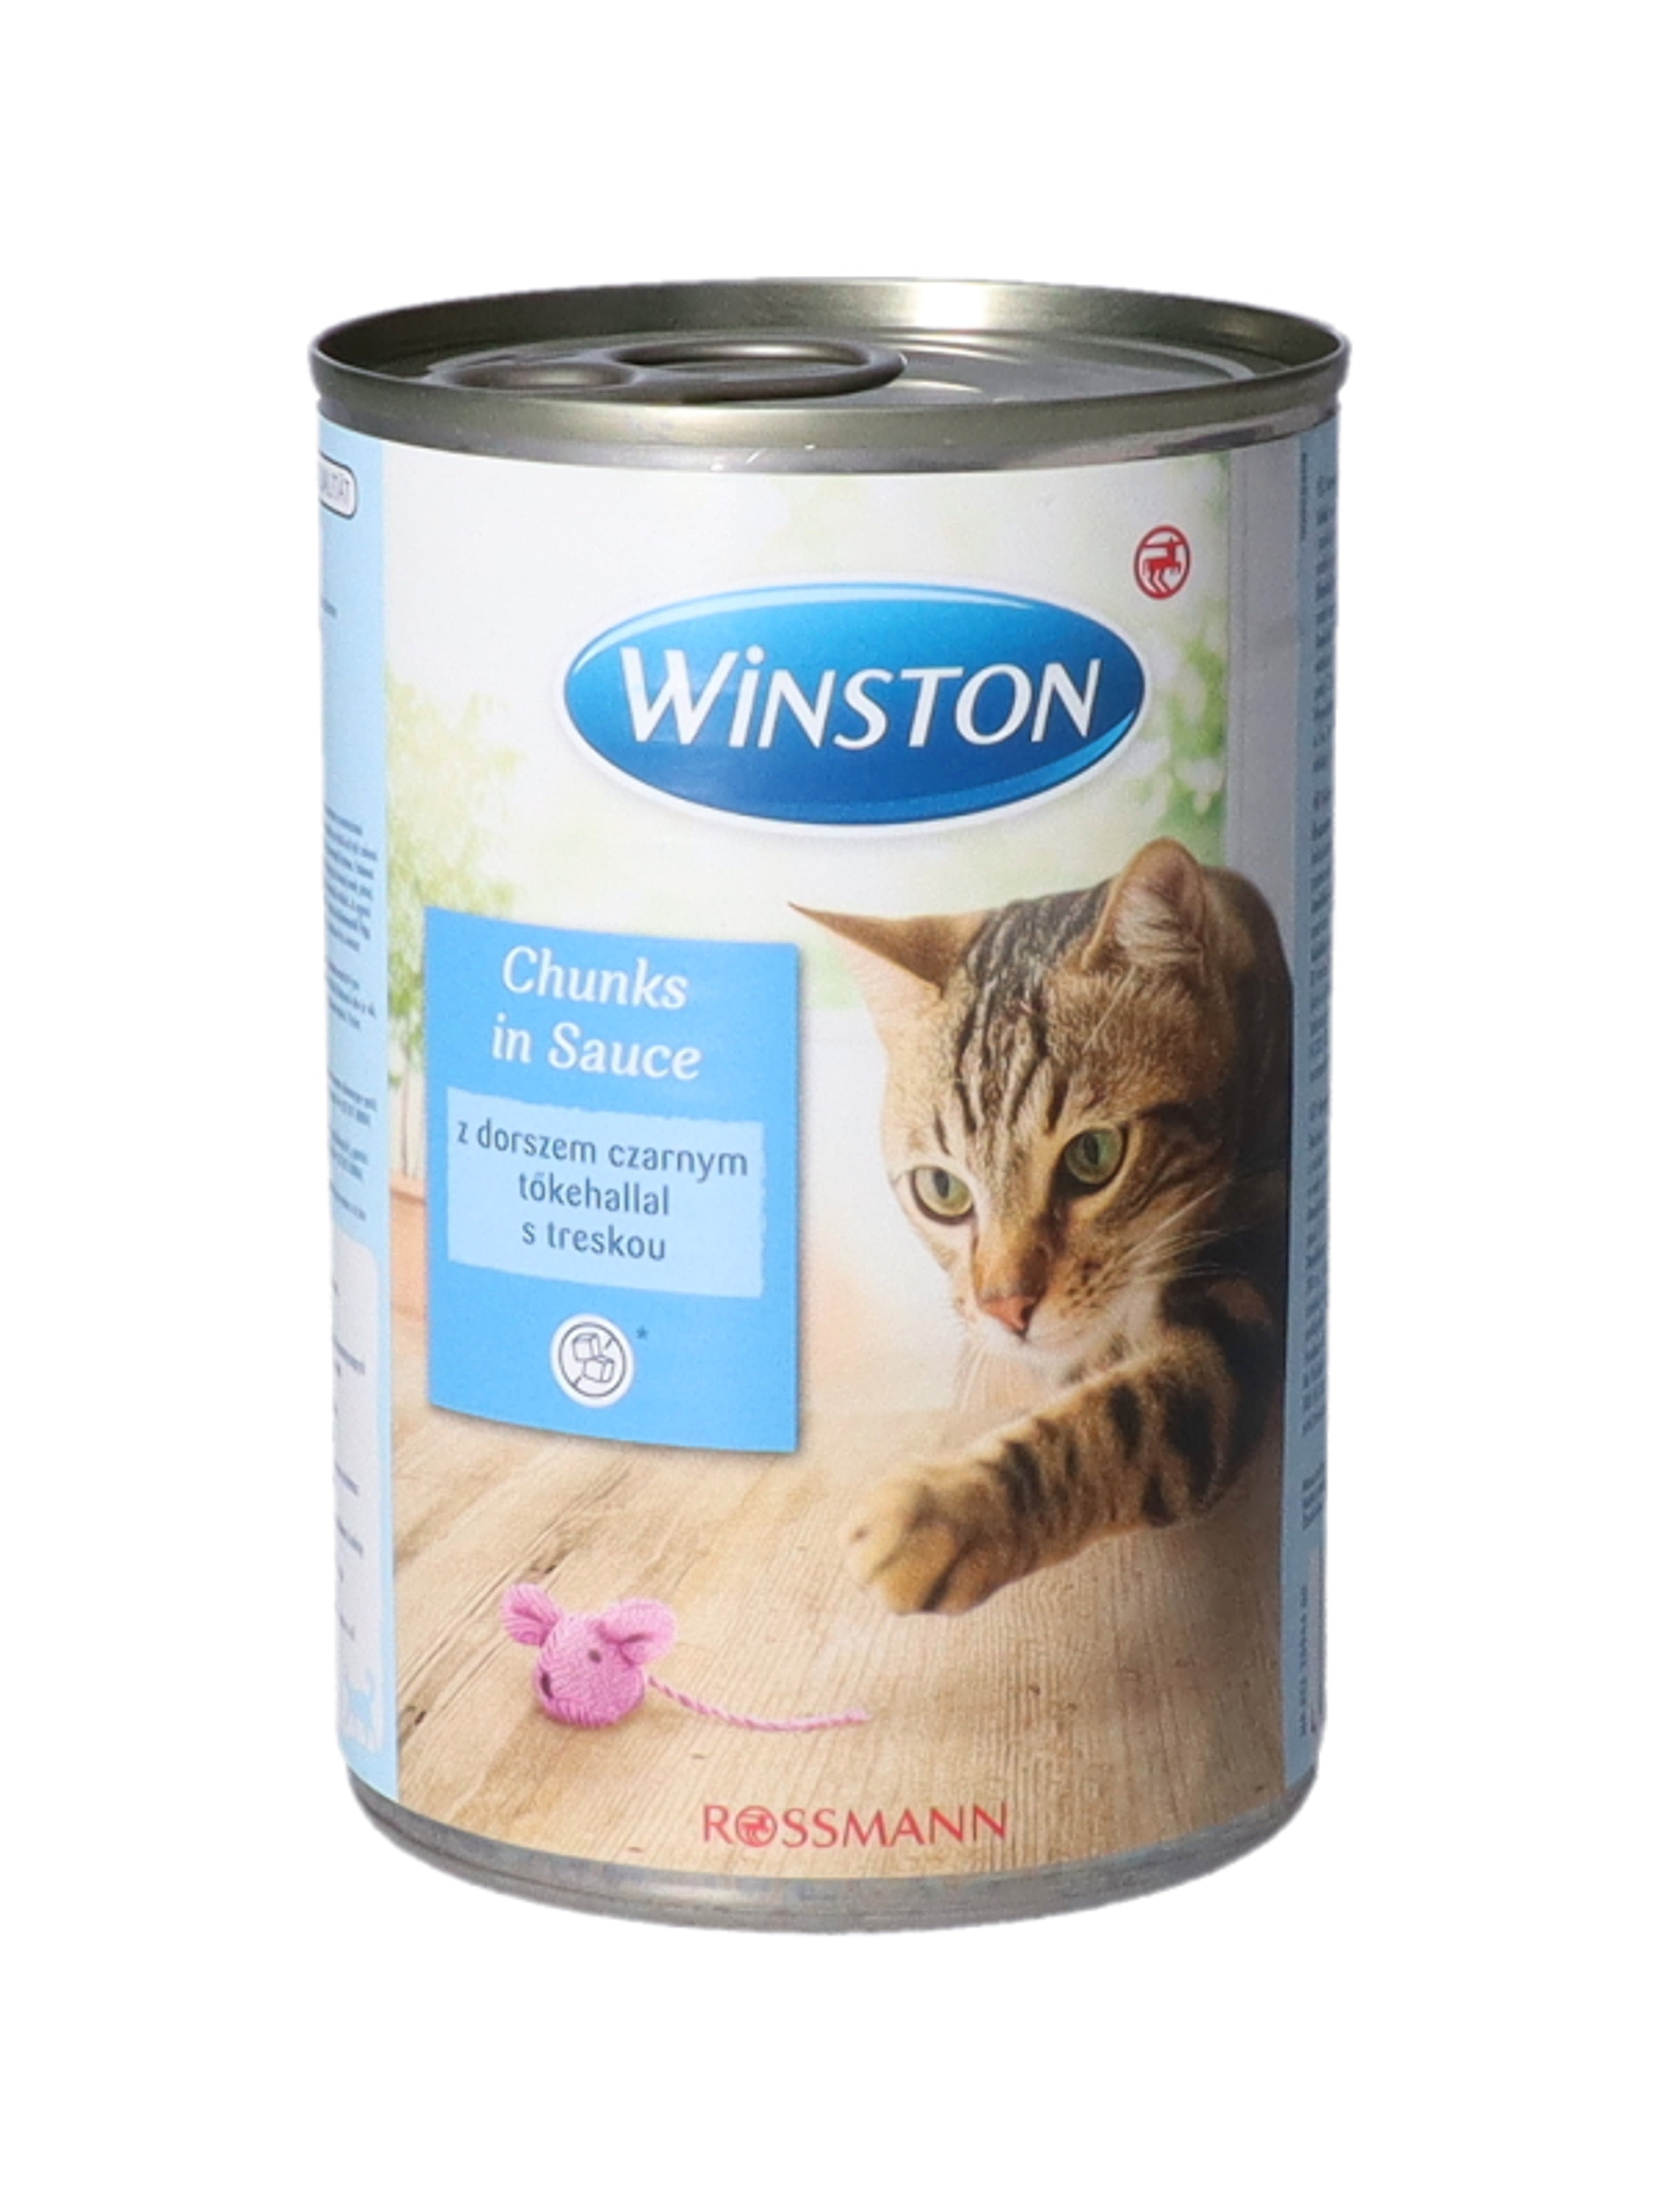 Winston konzerv macskáknak, lazaccal - 400 g-1